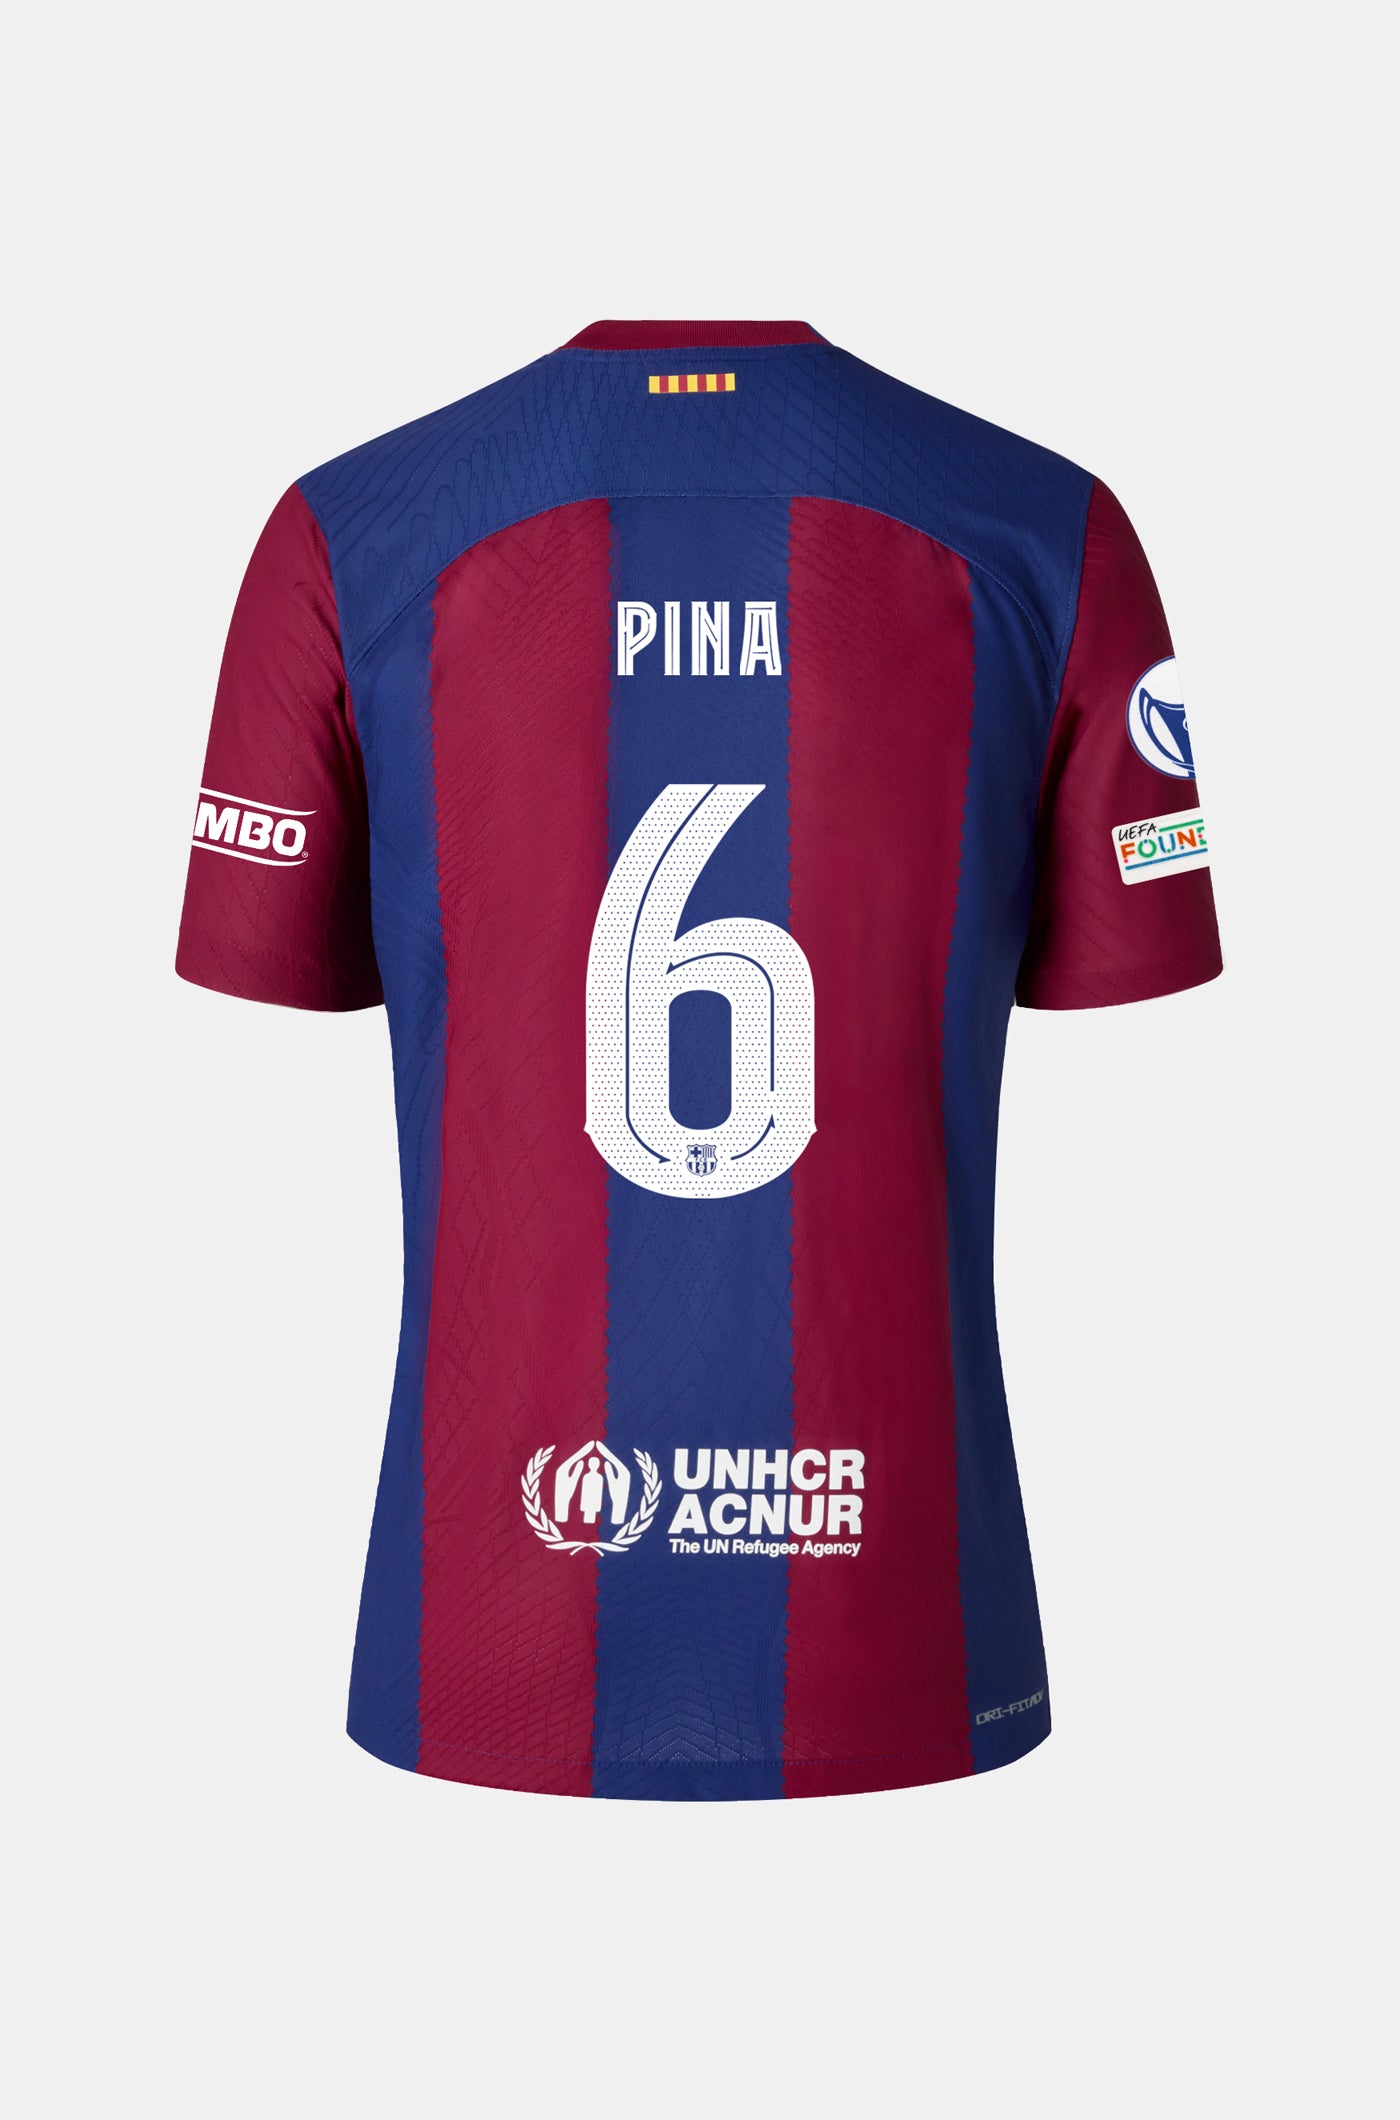 UWCL FC Barcelona Home Shirt 23/24 Player's Edition - Women - PINA